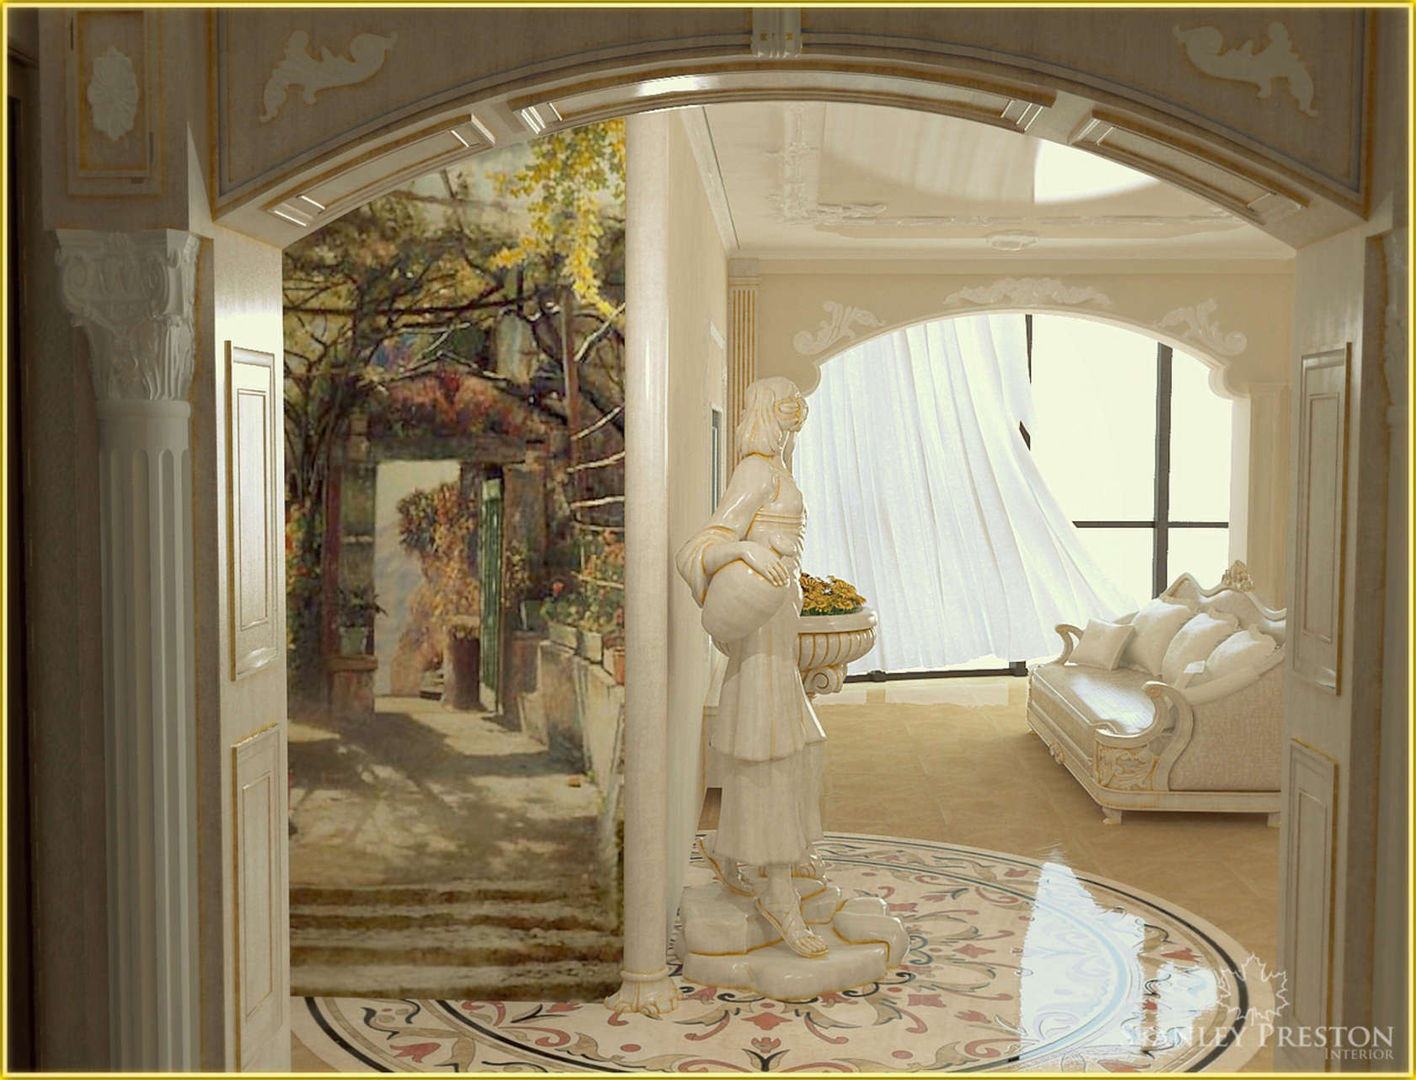 Веллер Хаус, Stanley Preston Interior Stanley Preston Interior Salones de estilo clásico